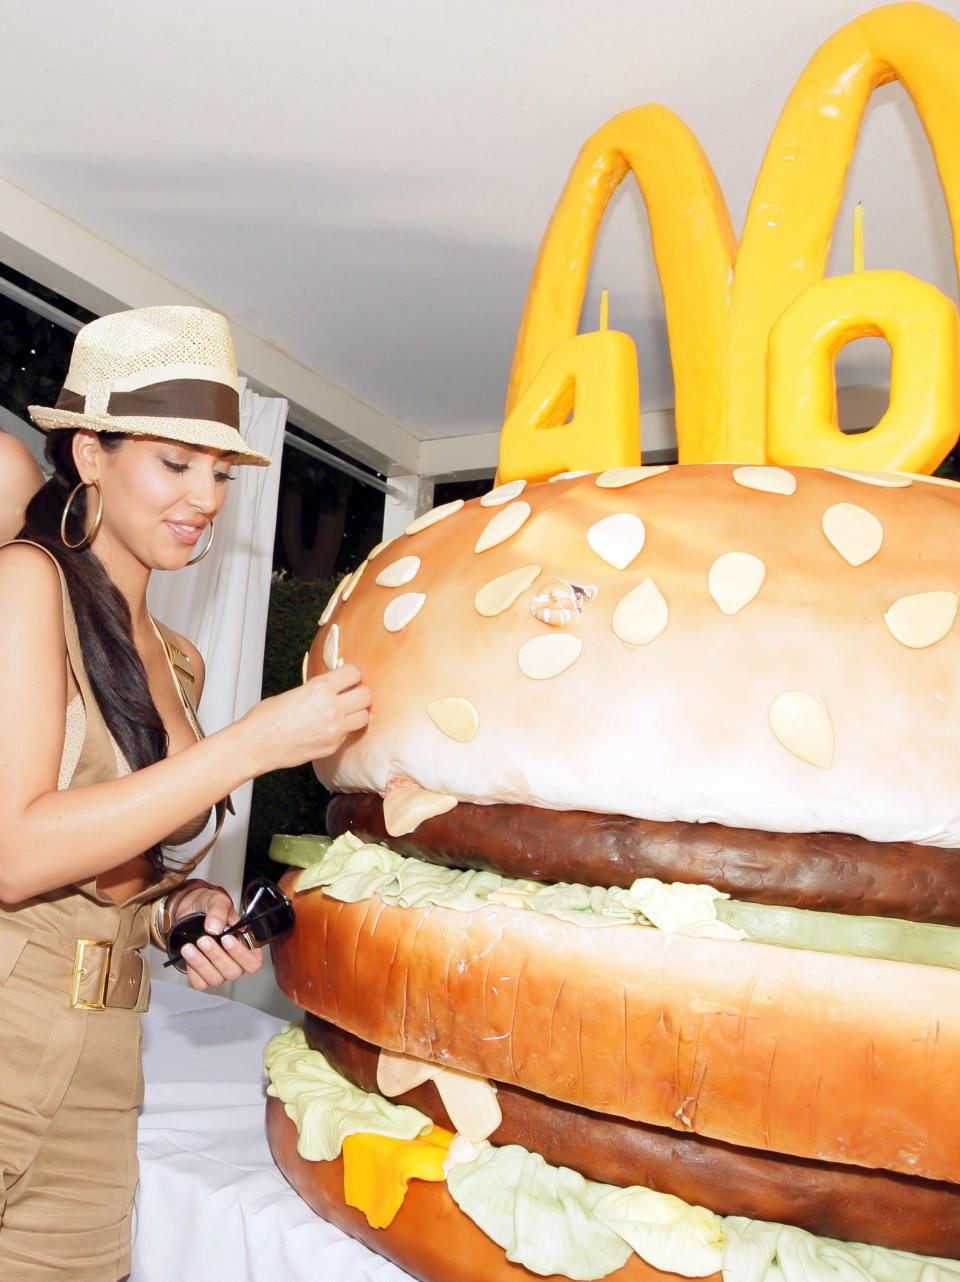 Kim Kardashian during McDonald's Big Mac 40th Birthday Party at Project Beach House in Malibu, CA on July 27, 2008. (Photo by Chris Polk/FilmMagic)